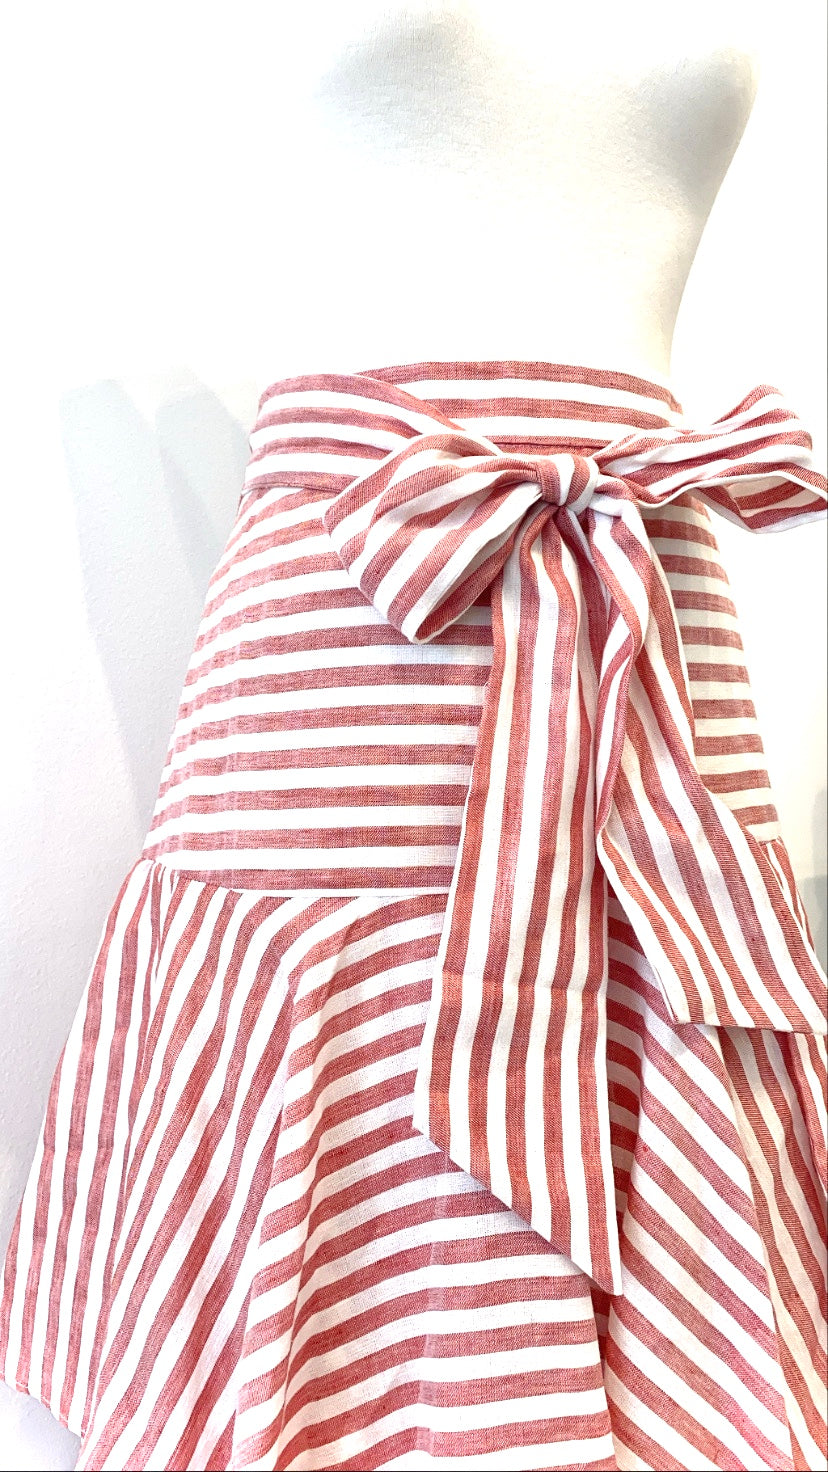 Badgley Mischka - Layered Striped Cotton Skirt with Sash